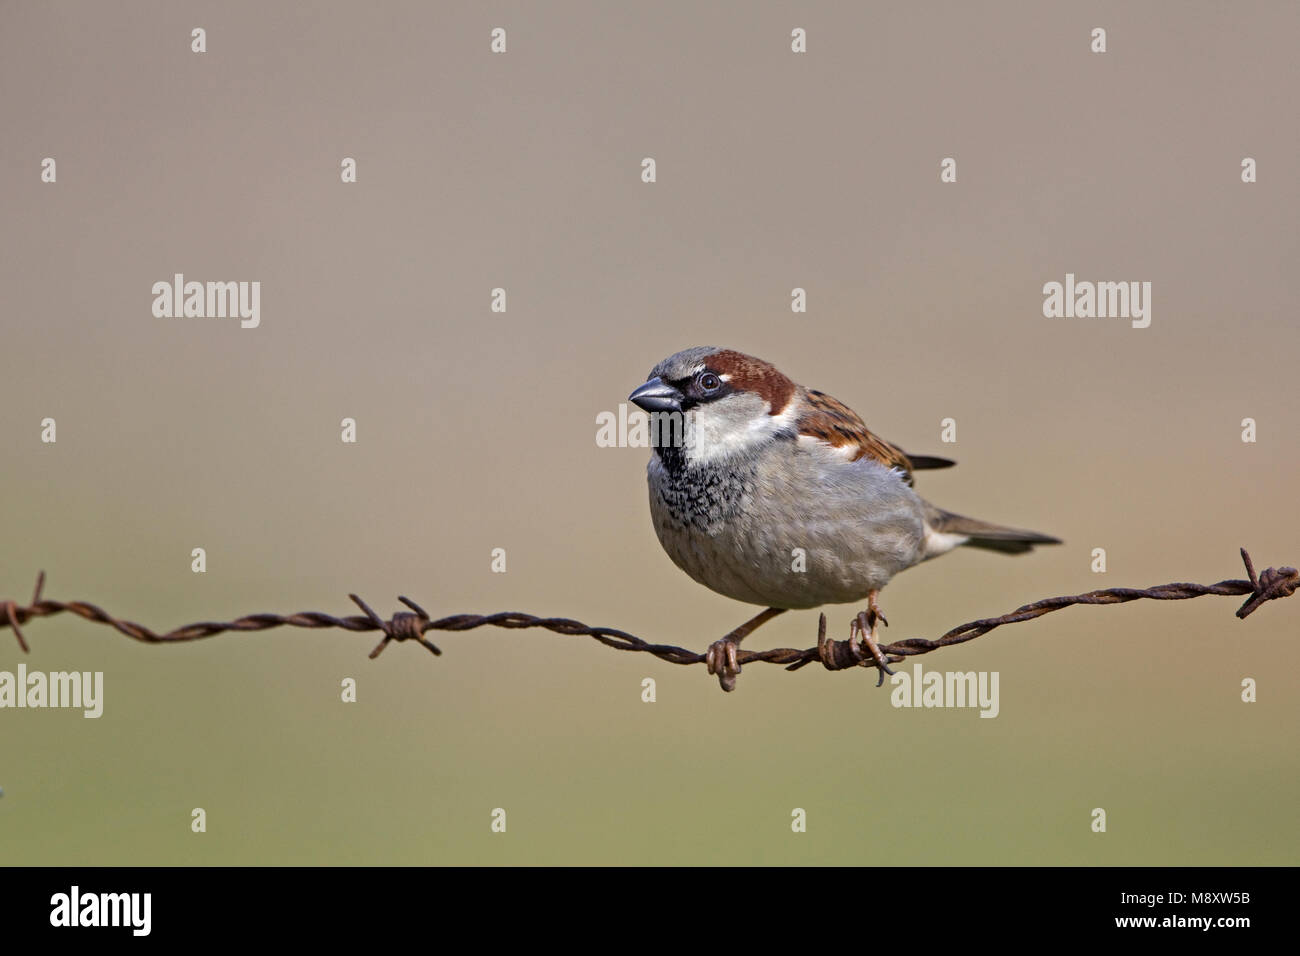 Man Huismus op prikkeldraad; Male House Sparrow on barbed wire Stock Photo